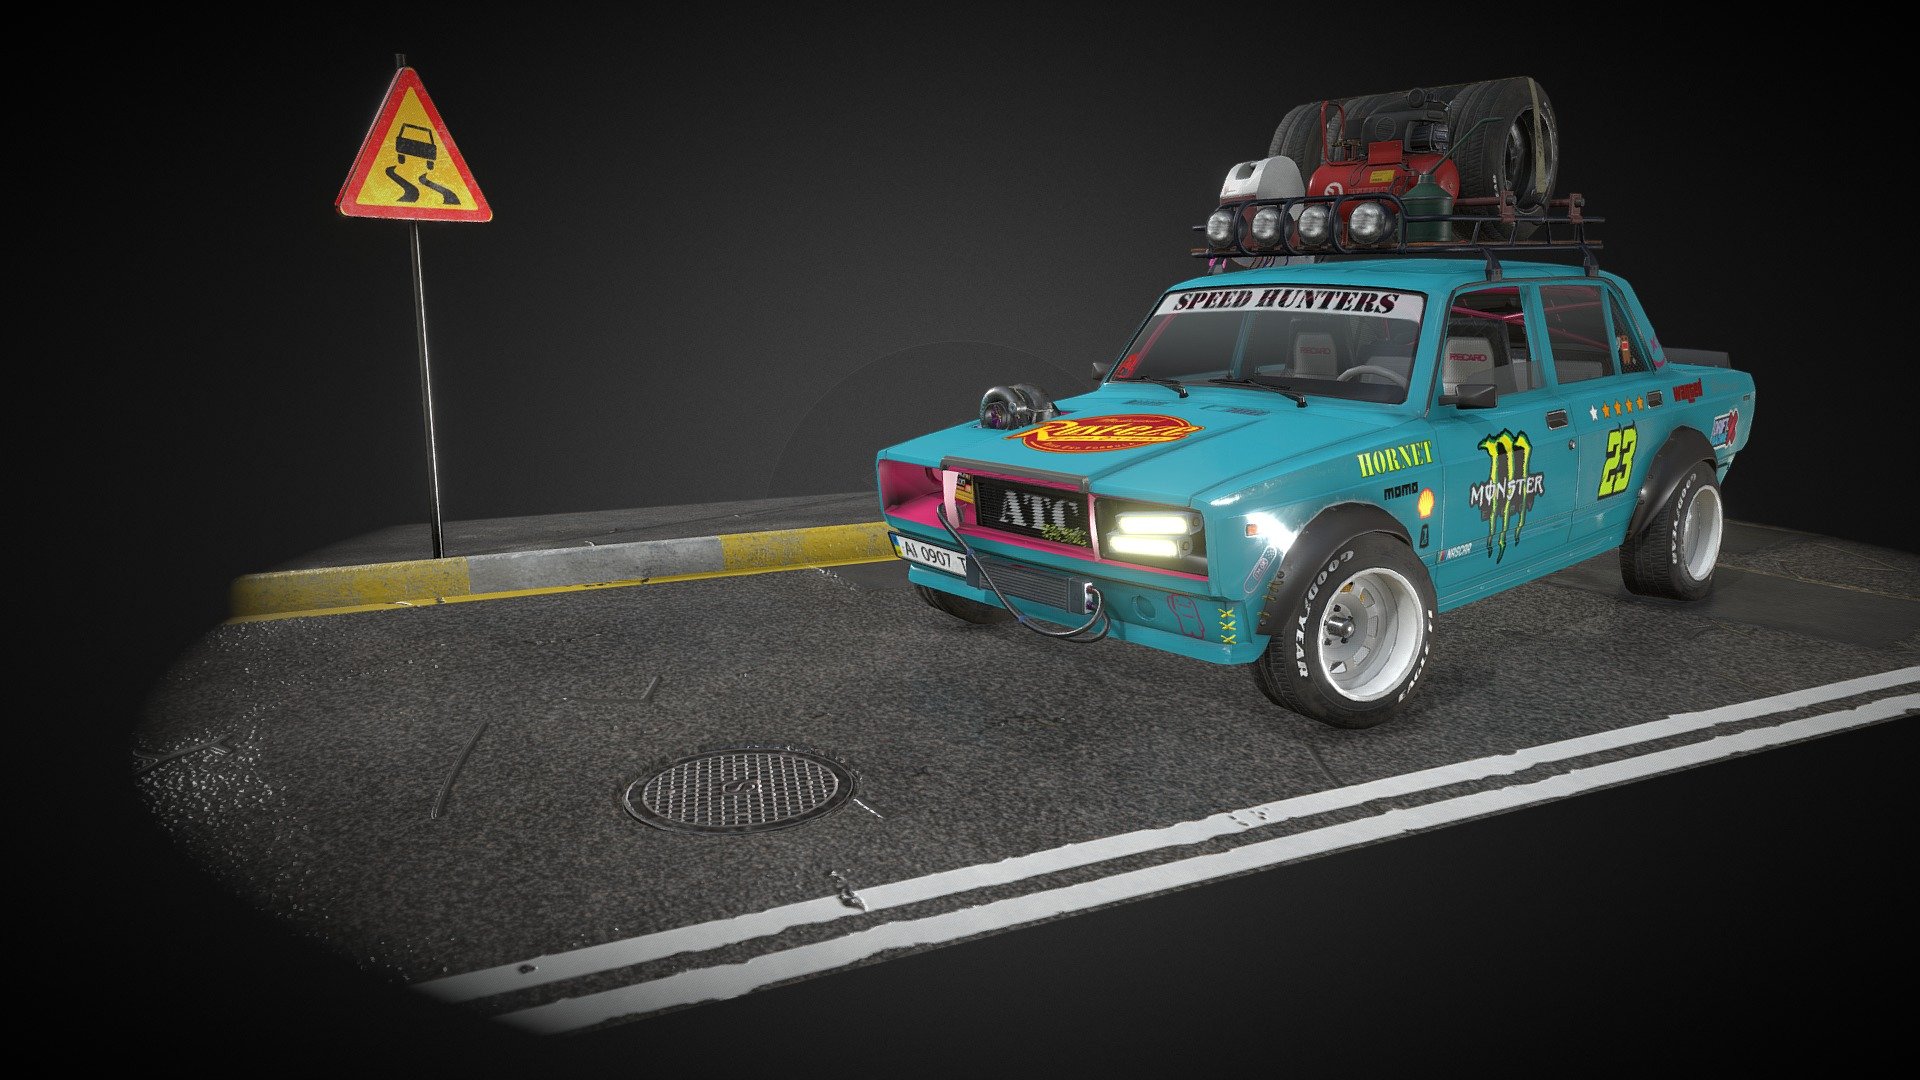 Vaz_2107_Drift car - 3D model by Phoenix_Connor (@odin.takoy1989) 3d model